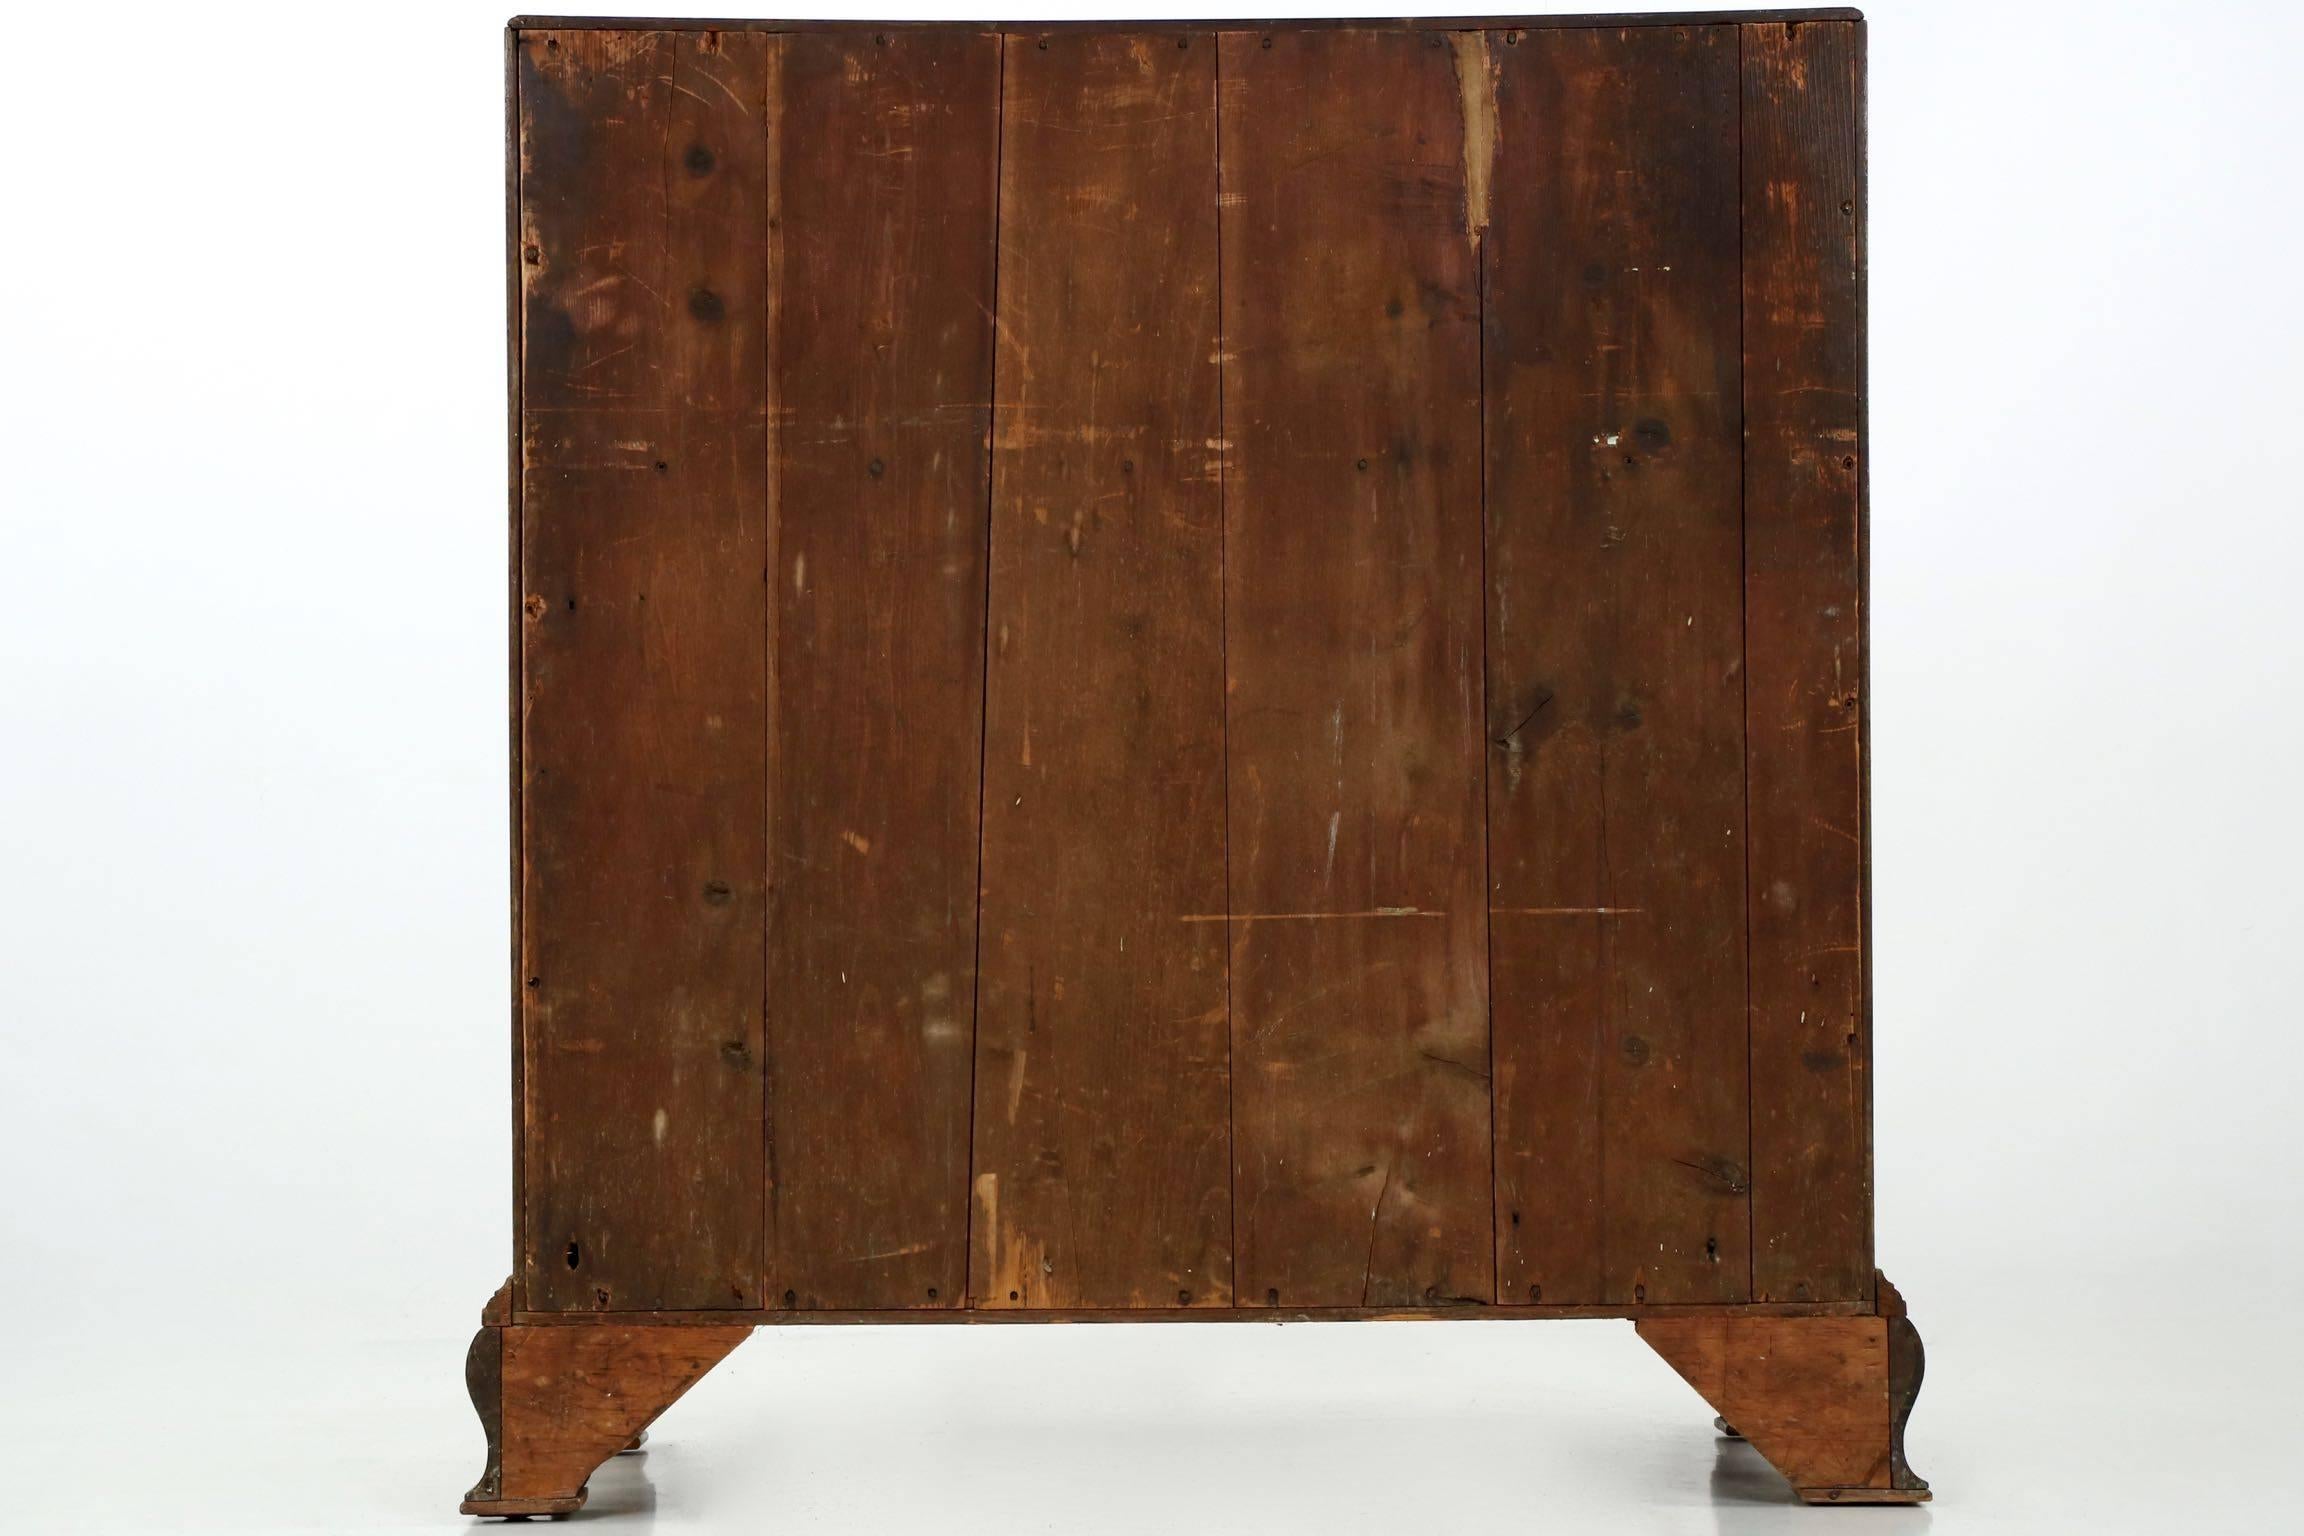 Late 18th Century American Chippendale Walnut Slant Front Desk, Philadelphia, circa 1785